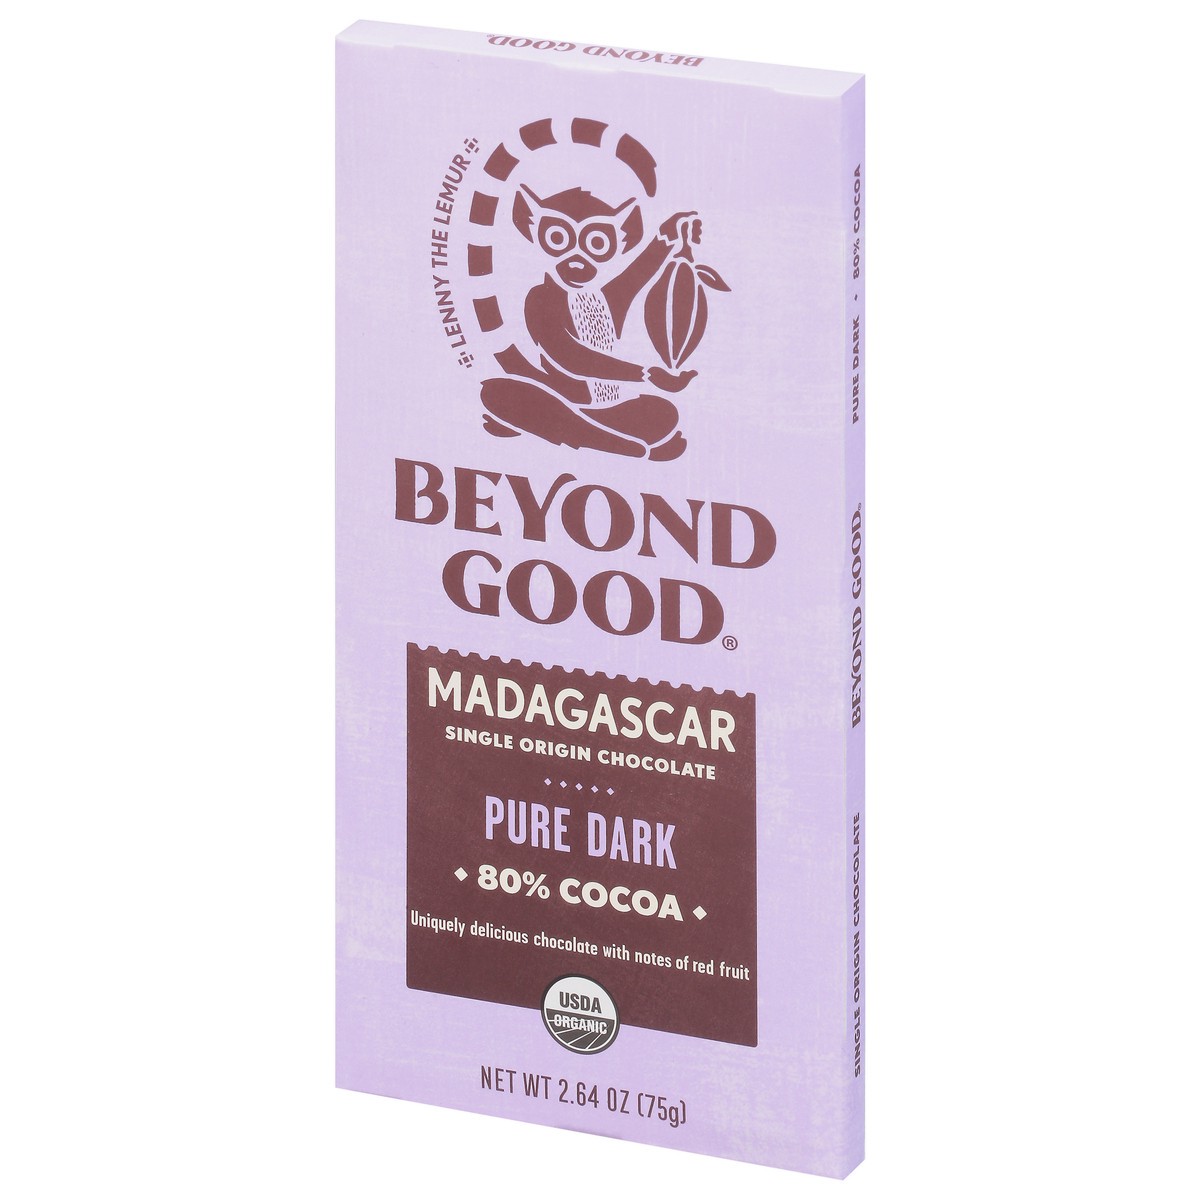 slide 12 of 13, Beyond Good 80% Cocoa Madagascar Pure Dark Single Origin Chocolate 2.64 oz, 2.64 oz